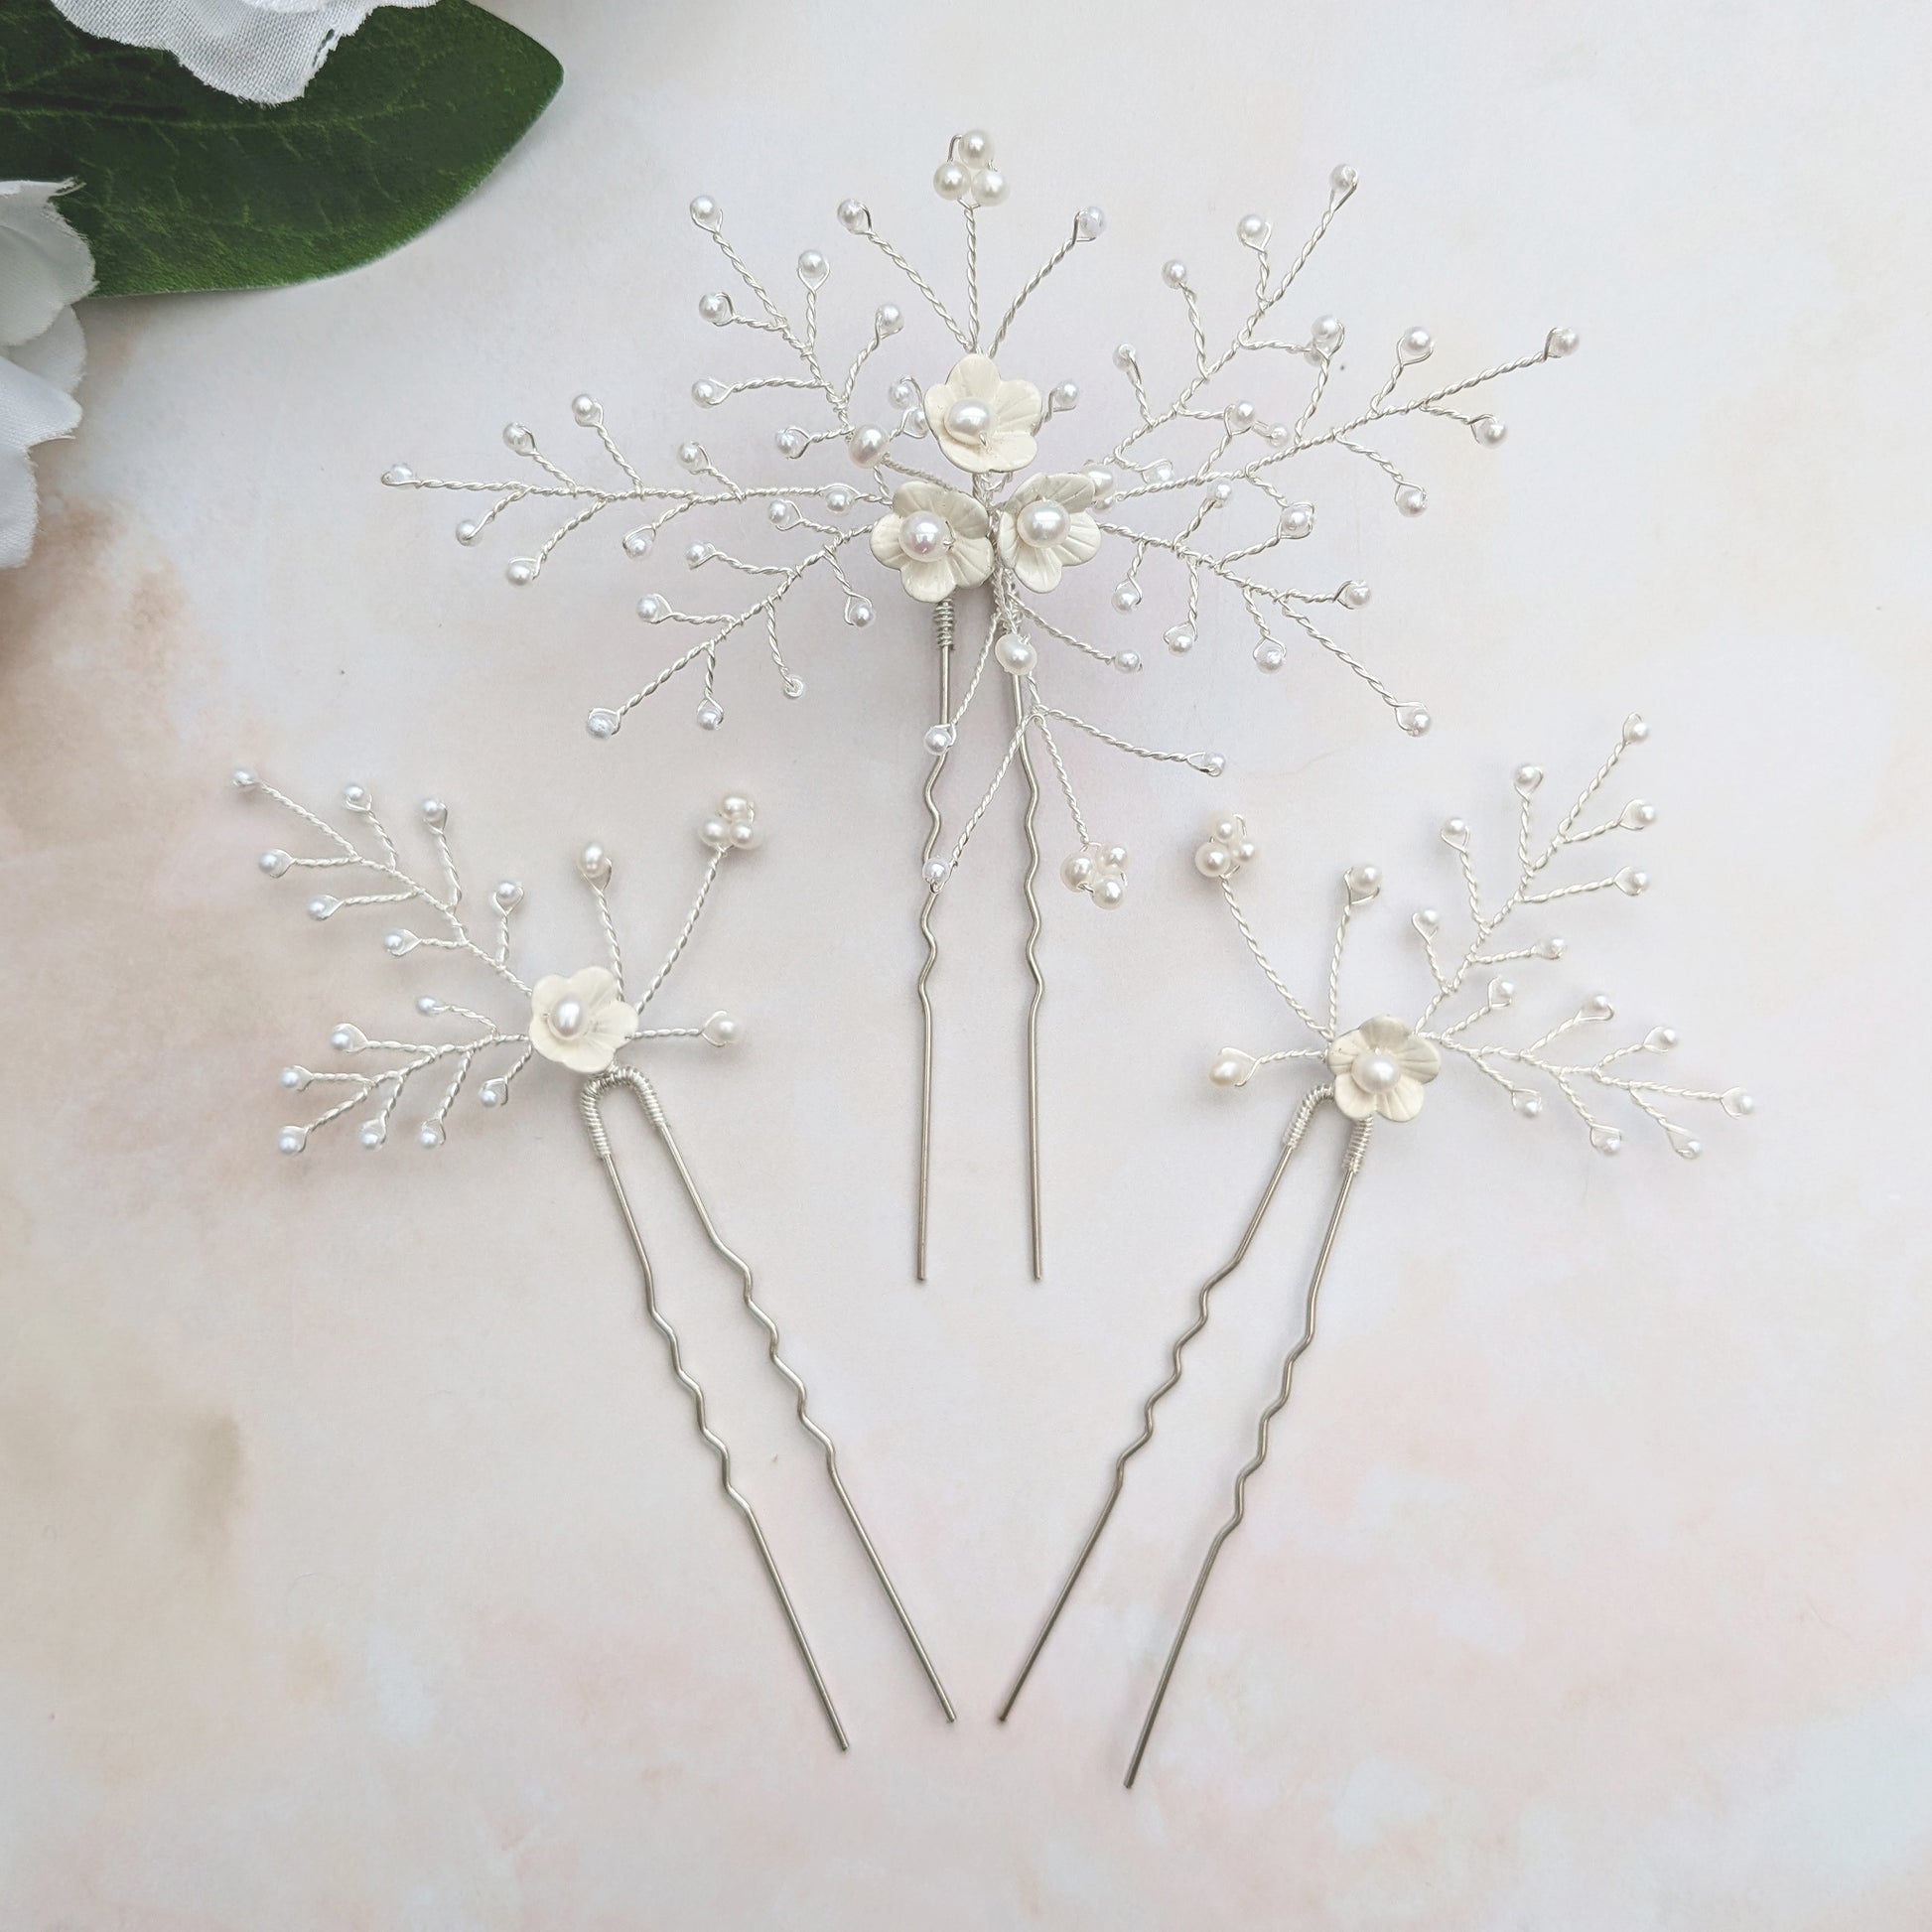 White floral hair pins - Susie Warner